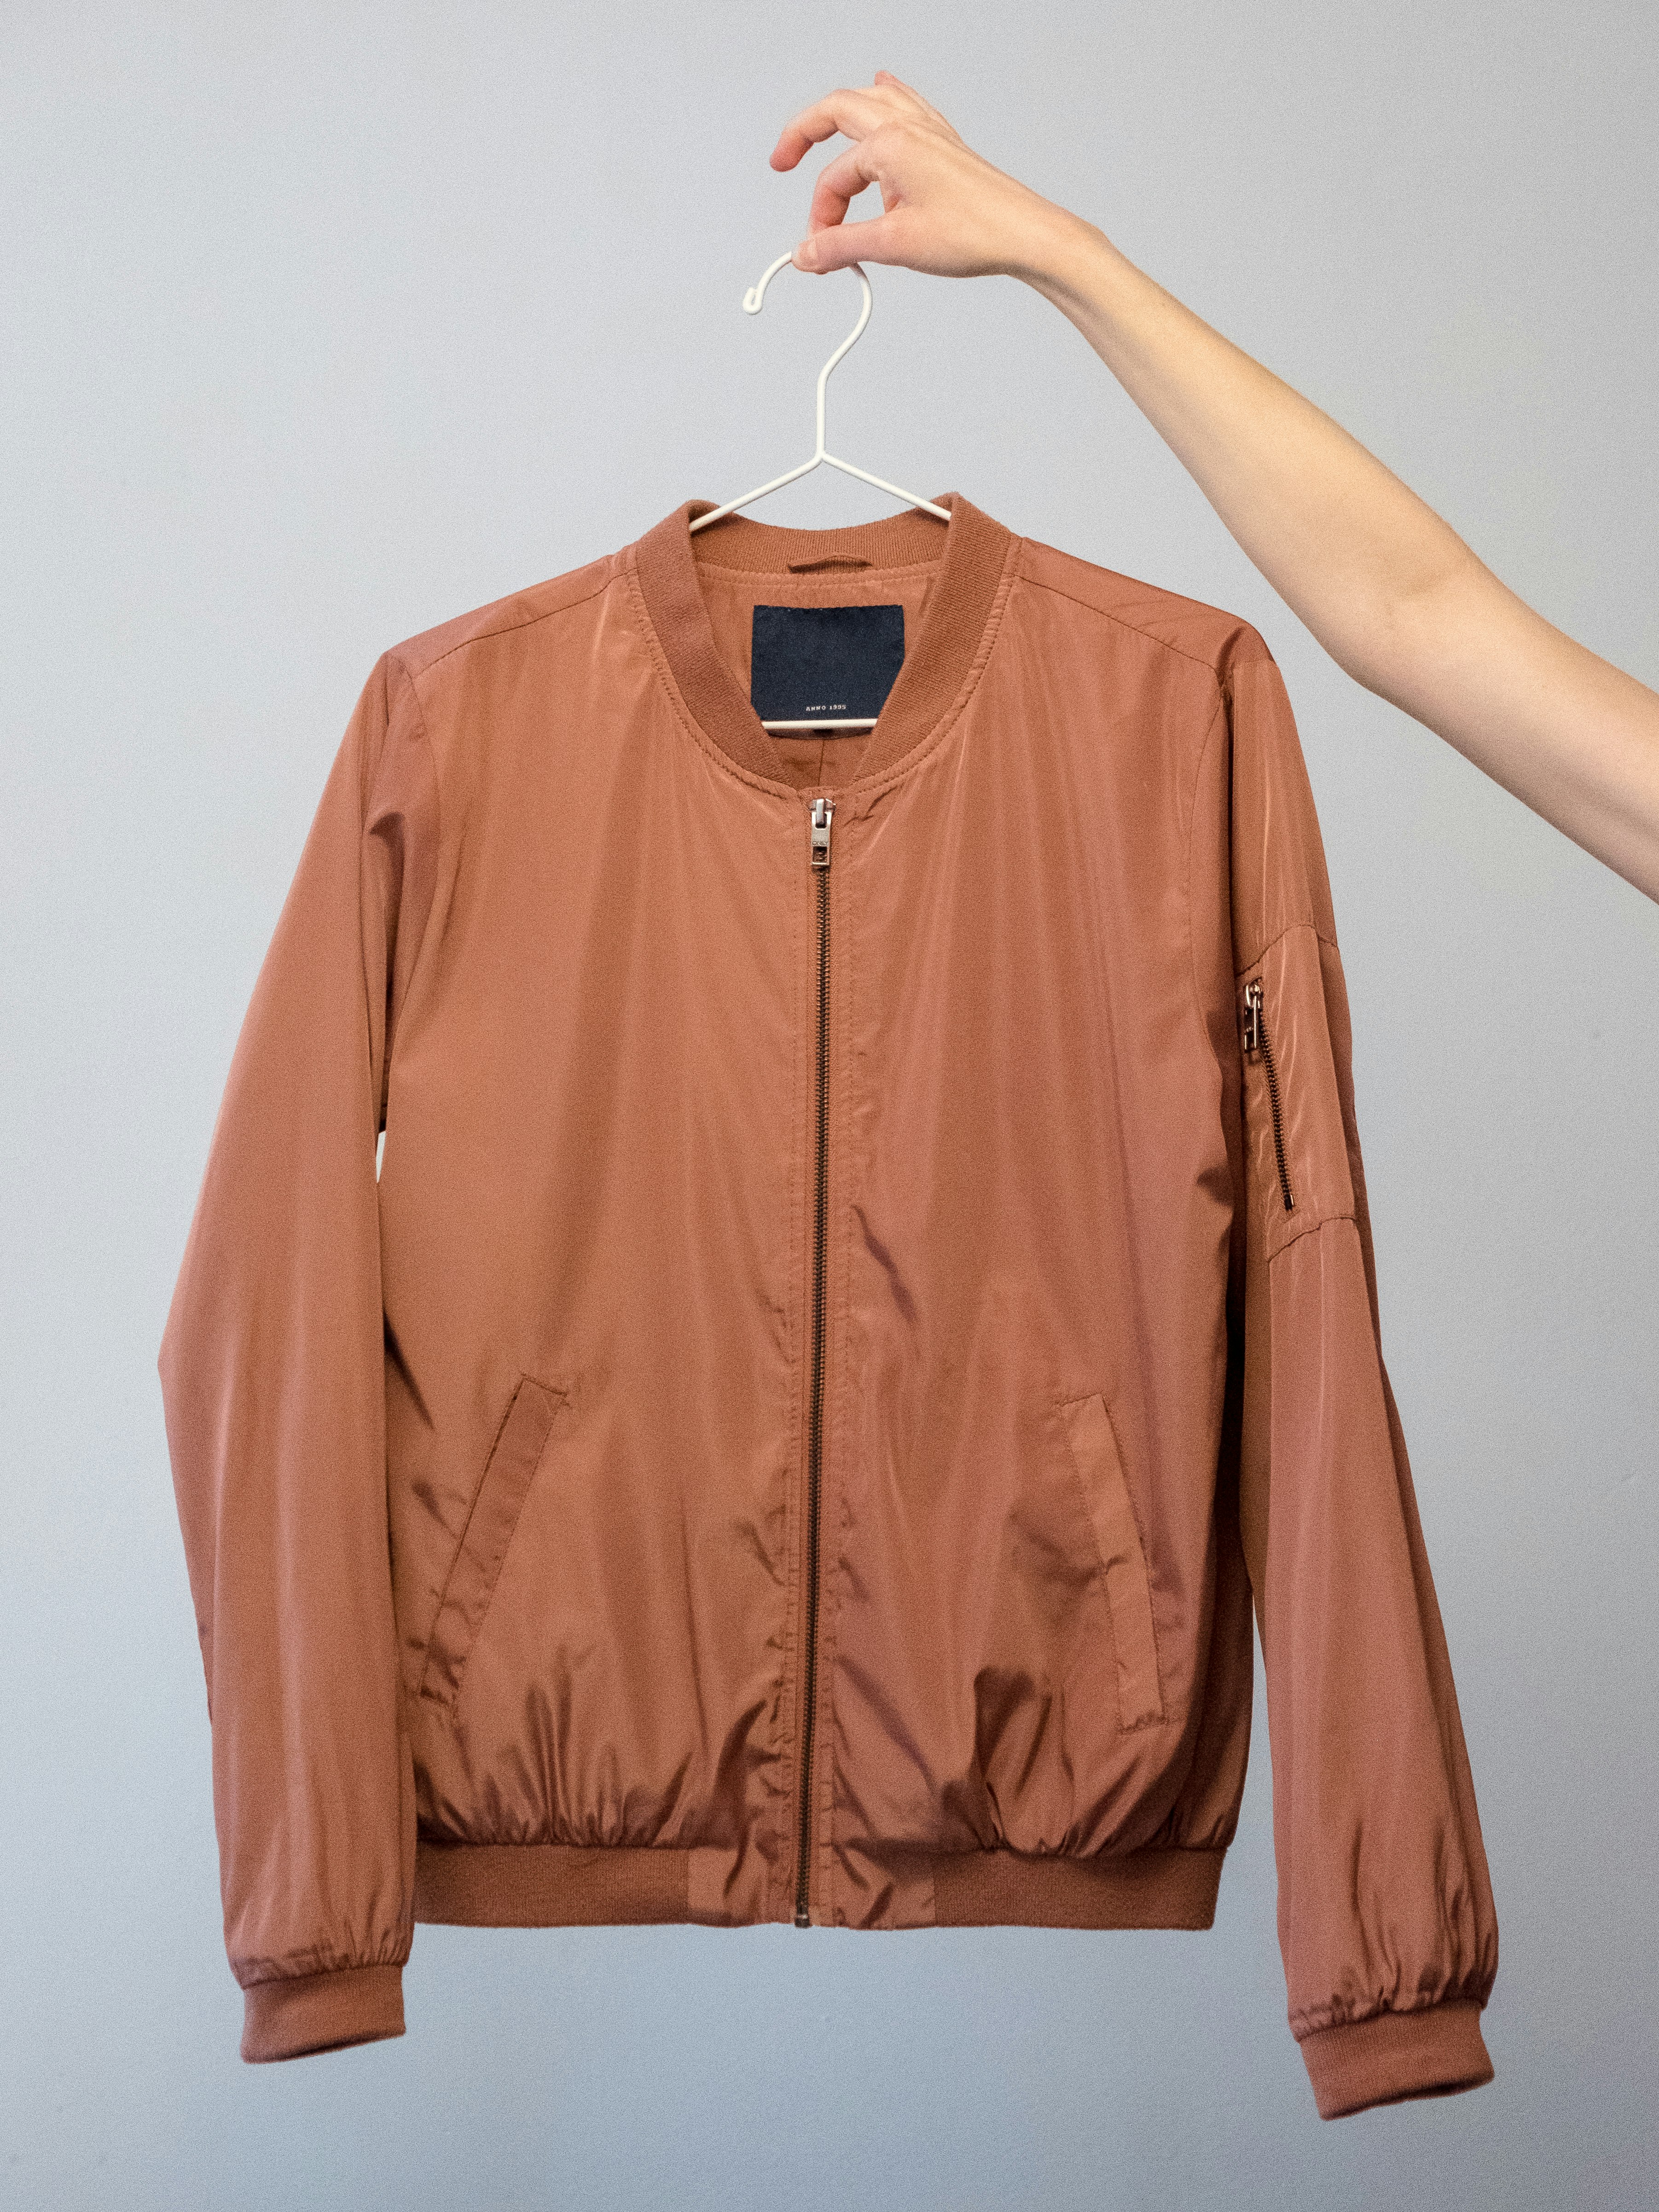 A jacket for sale on a coat hanger